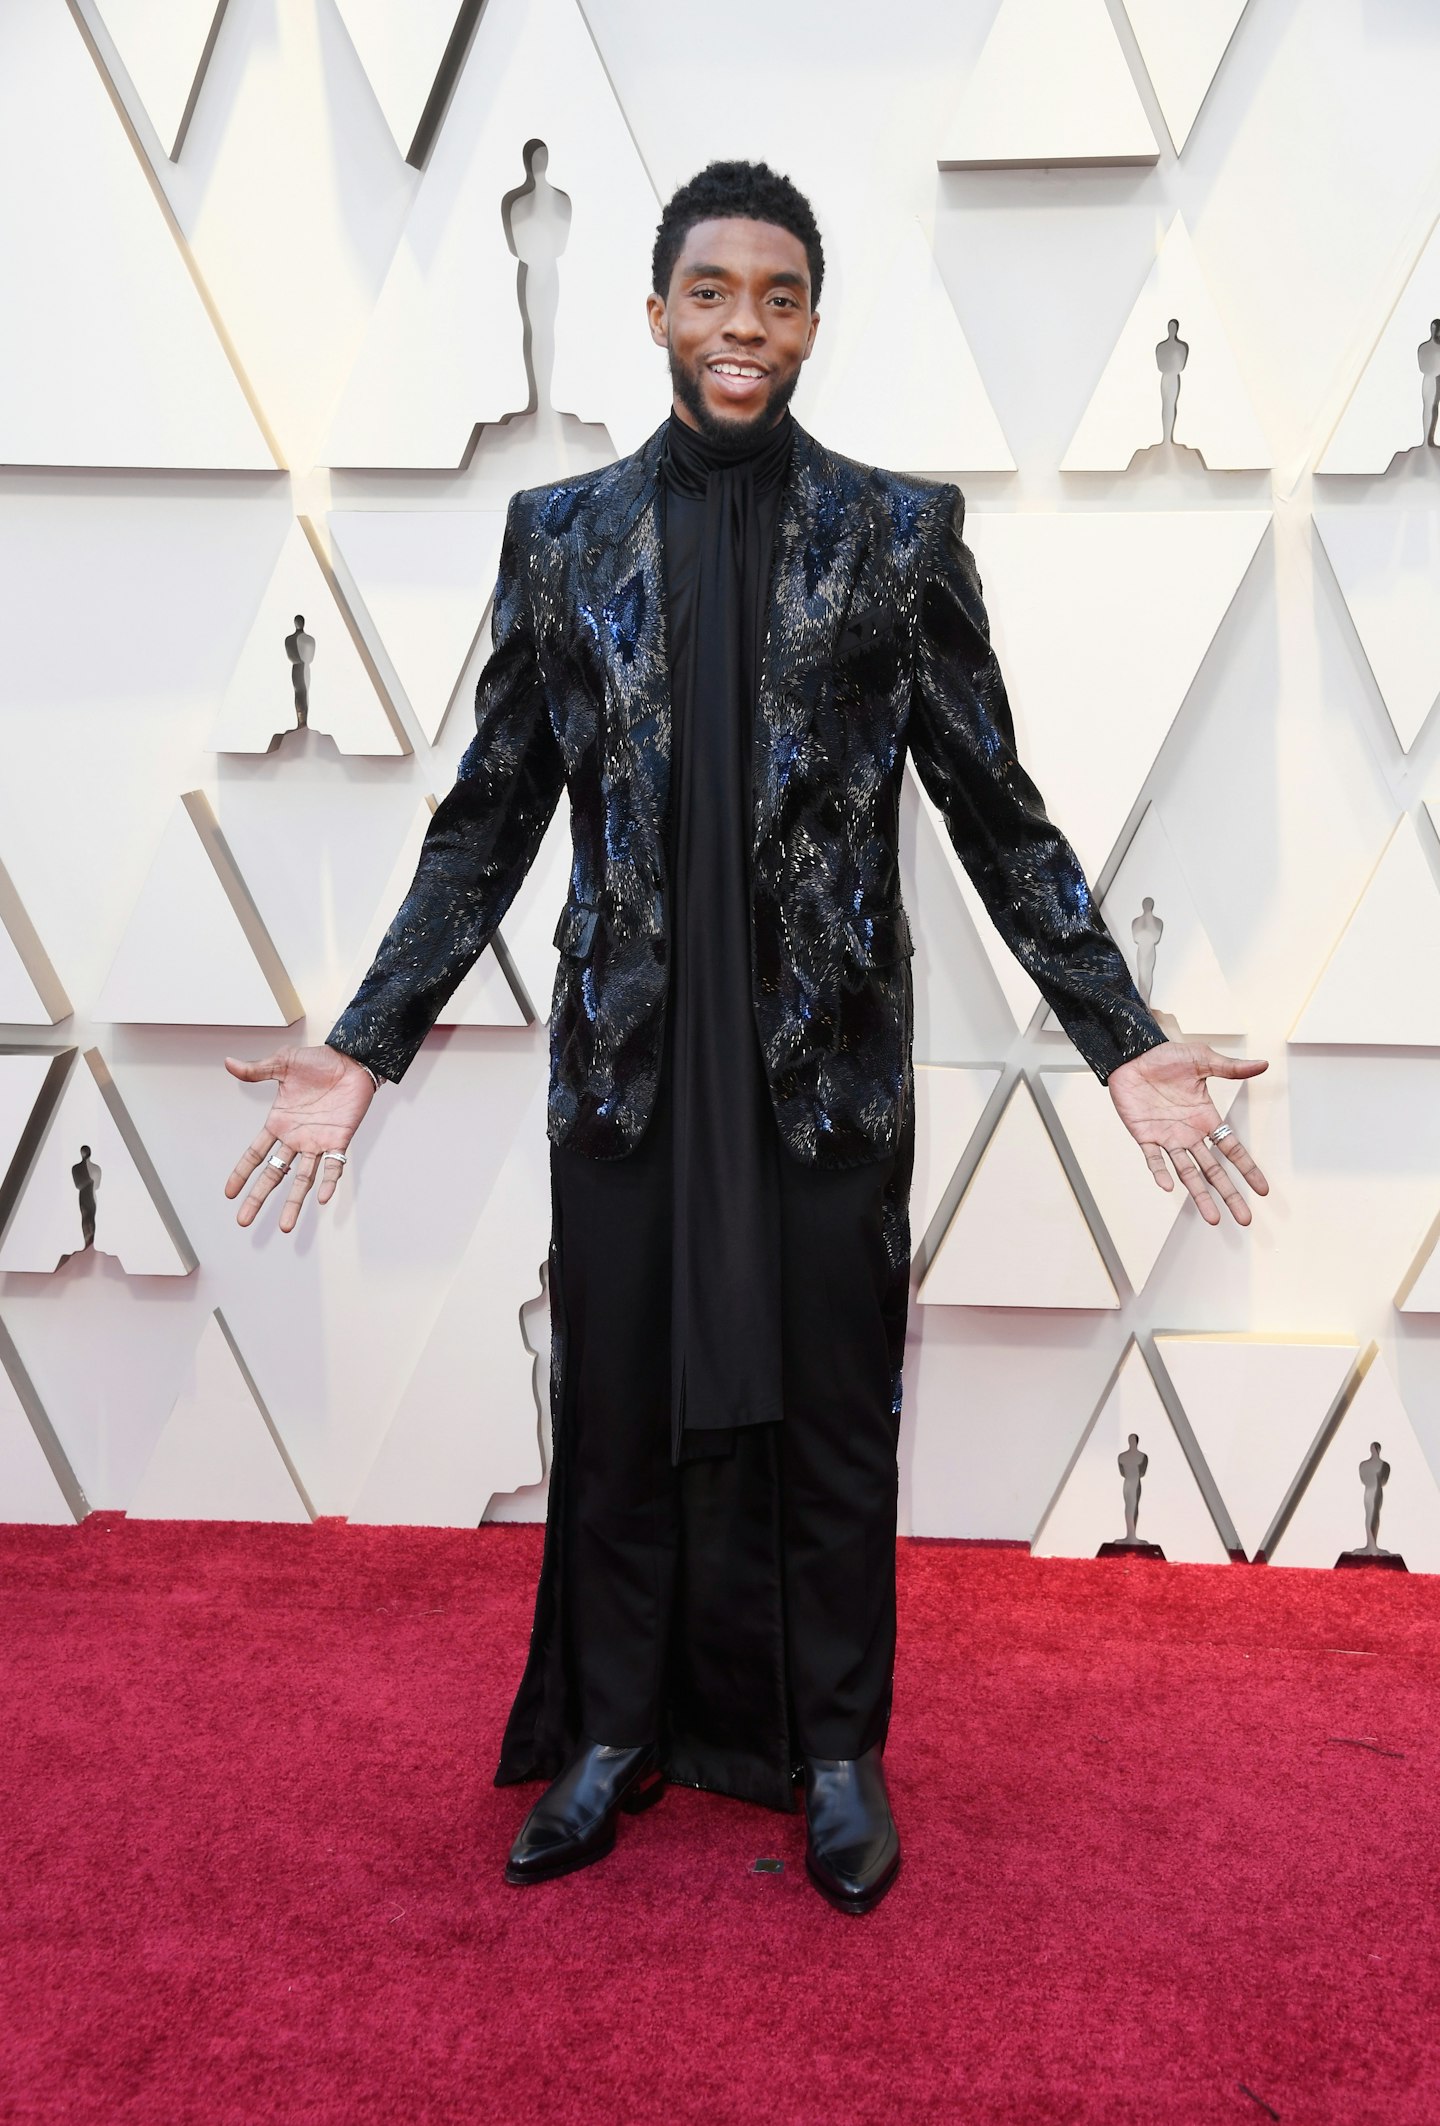 Chadwick Boseman at the 2019 Oscars